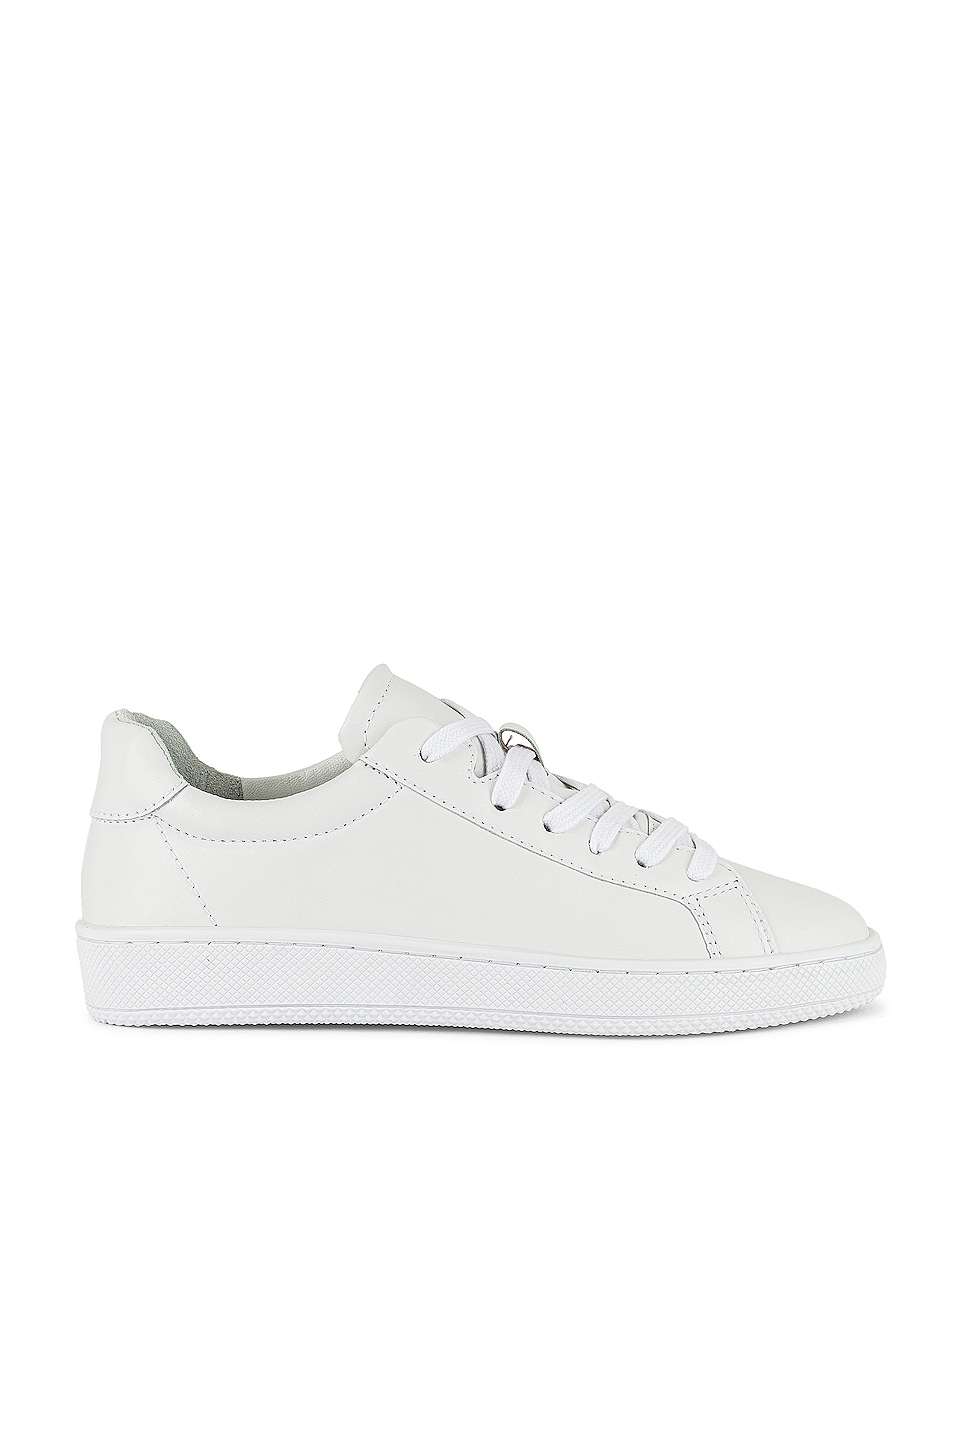 Schutz Verony Low Sneaker in White | REVOLVE